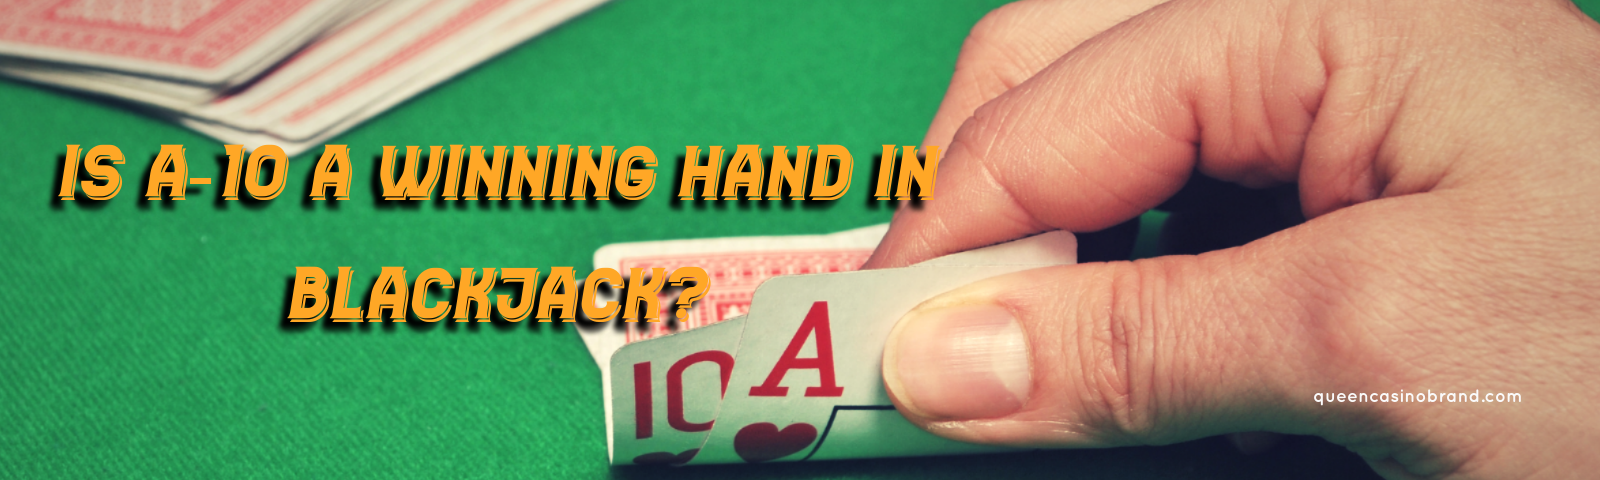 Is A-10 a Winning Hand in Blackjack - Queen Casino Brand